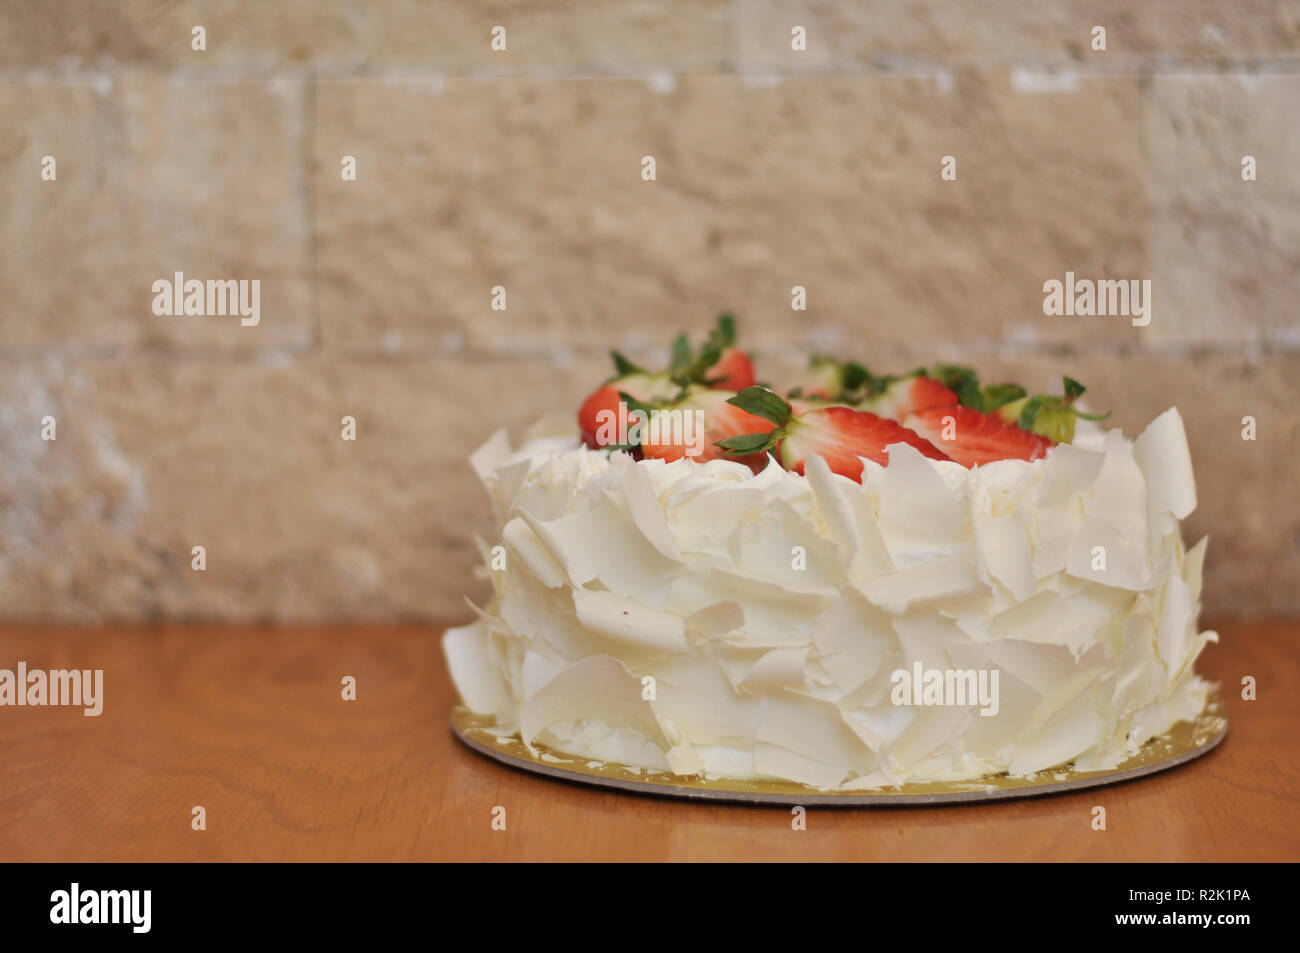 White chocolate strawberry cake with fresh strawberry fruits on top and white chocolate pieces around Stock Photo